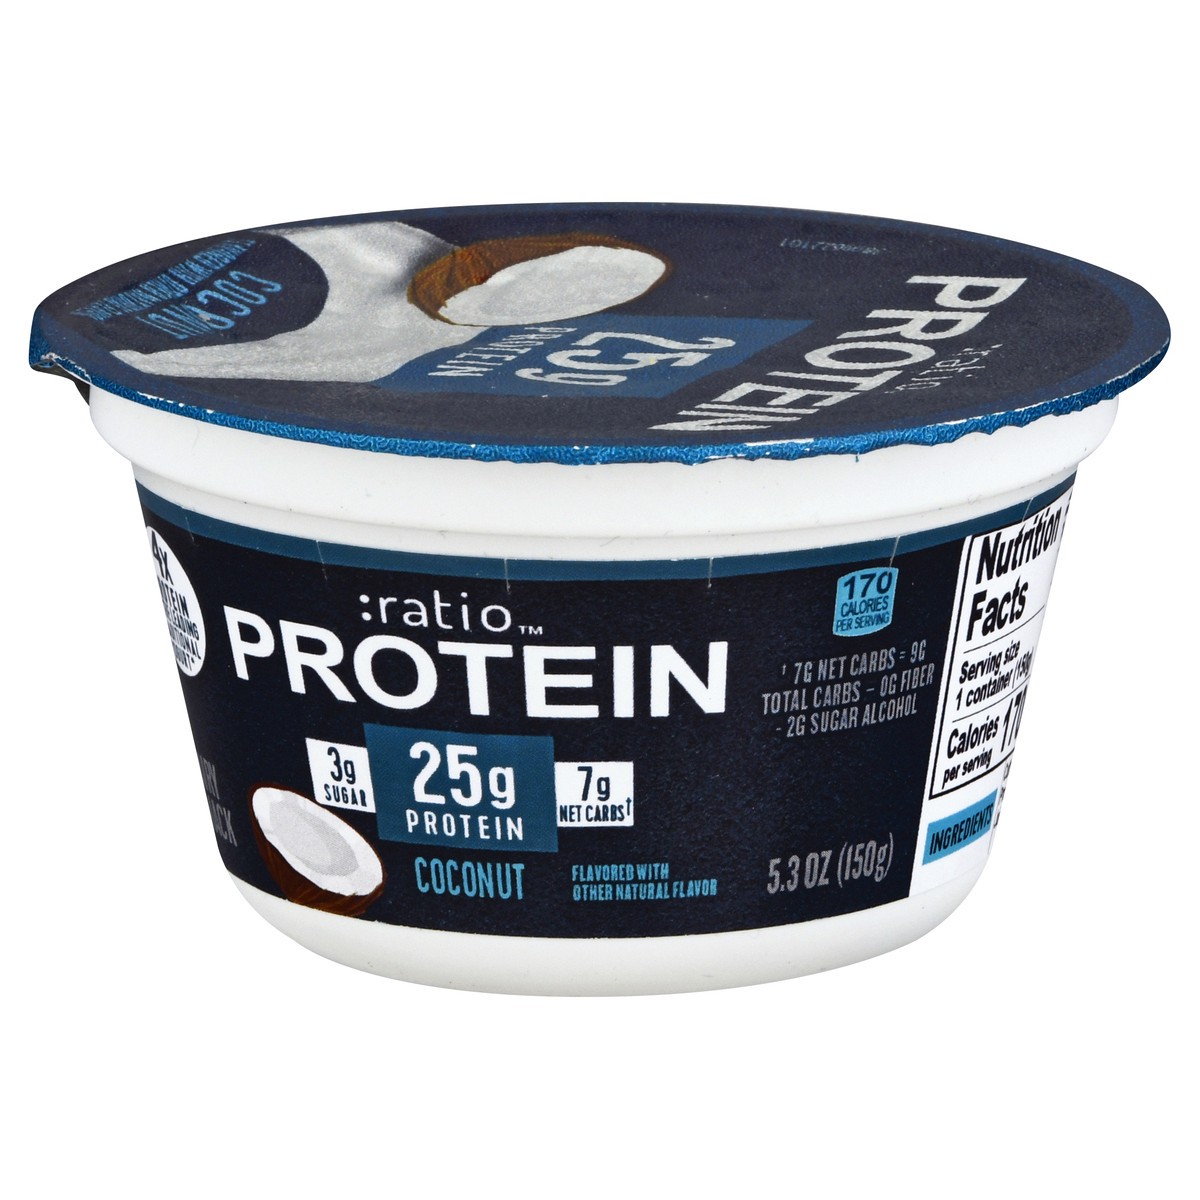 slide 3 of 9, :ratio Yogurt Protein Cultured Dairy Snack, Coconut, 25g Protein, 5.3 OZ, 5.3 oz